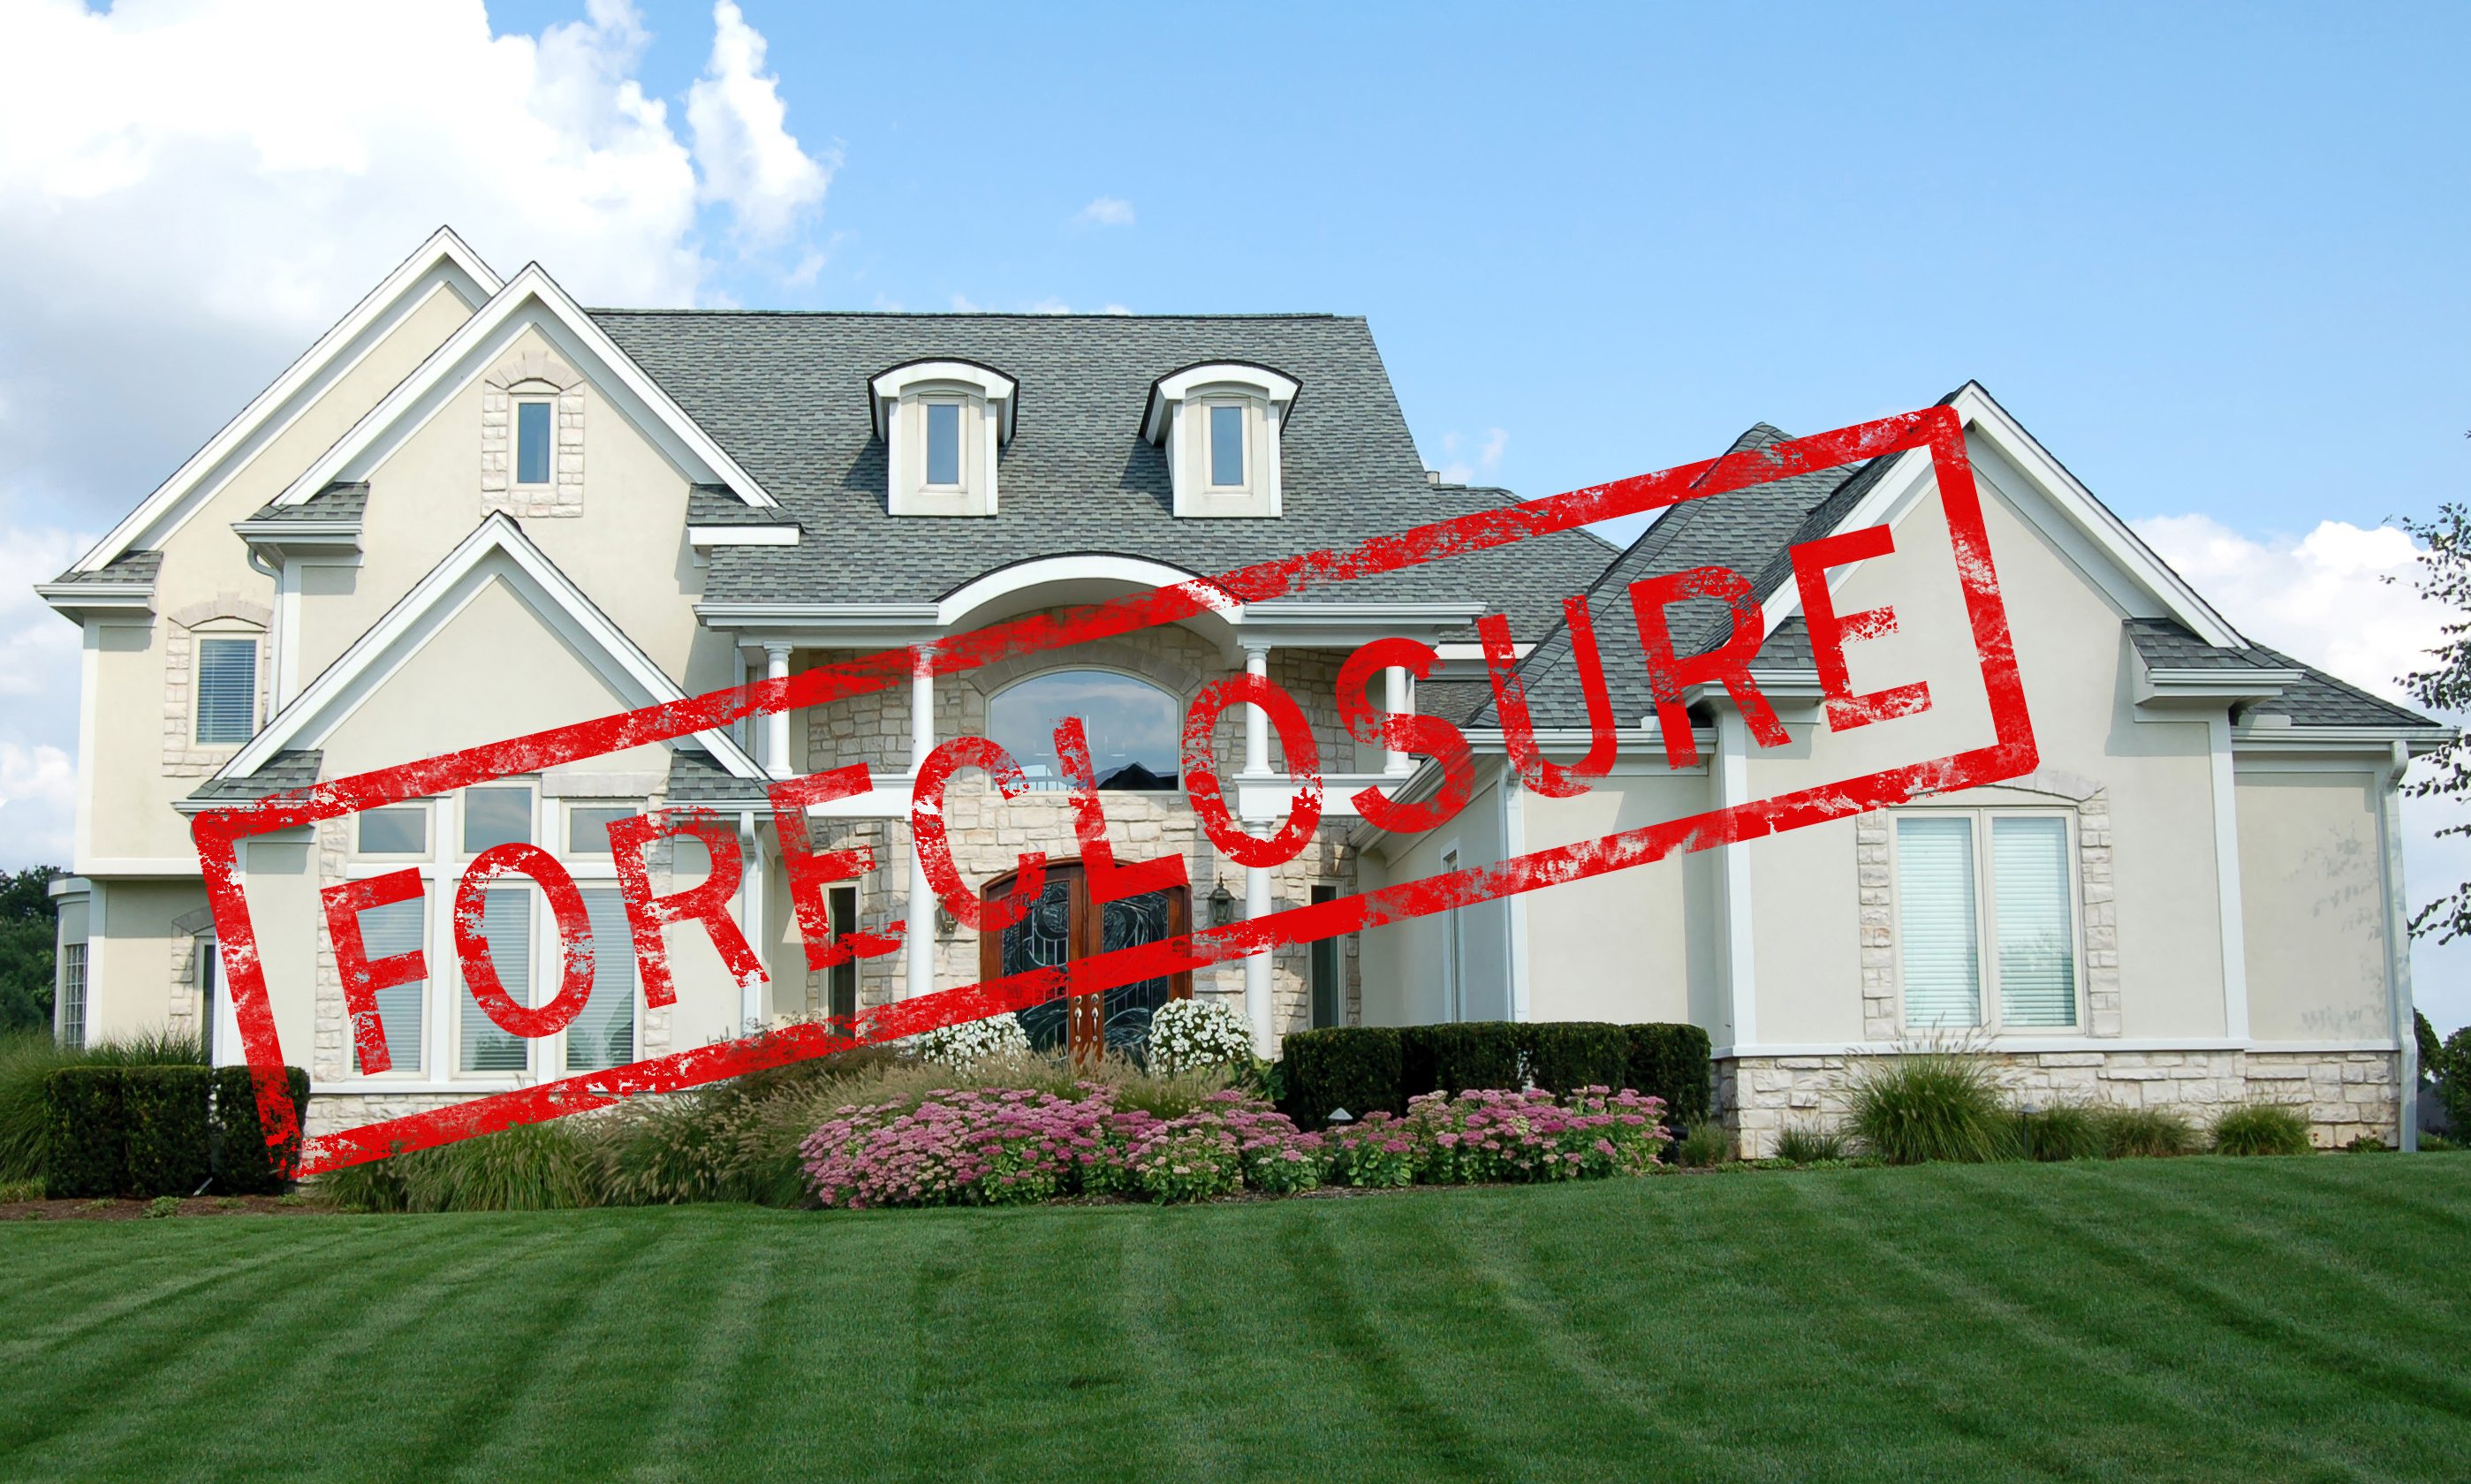 Call Giles Appraisal Group, Inc when you need appraisals regarding Bay foreclosures